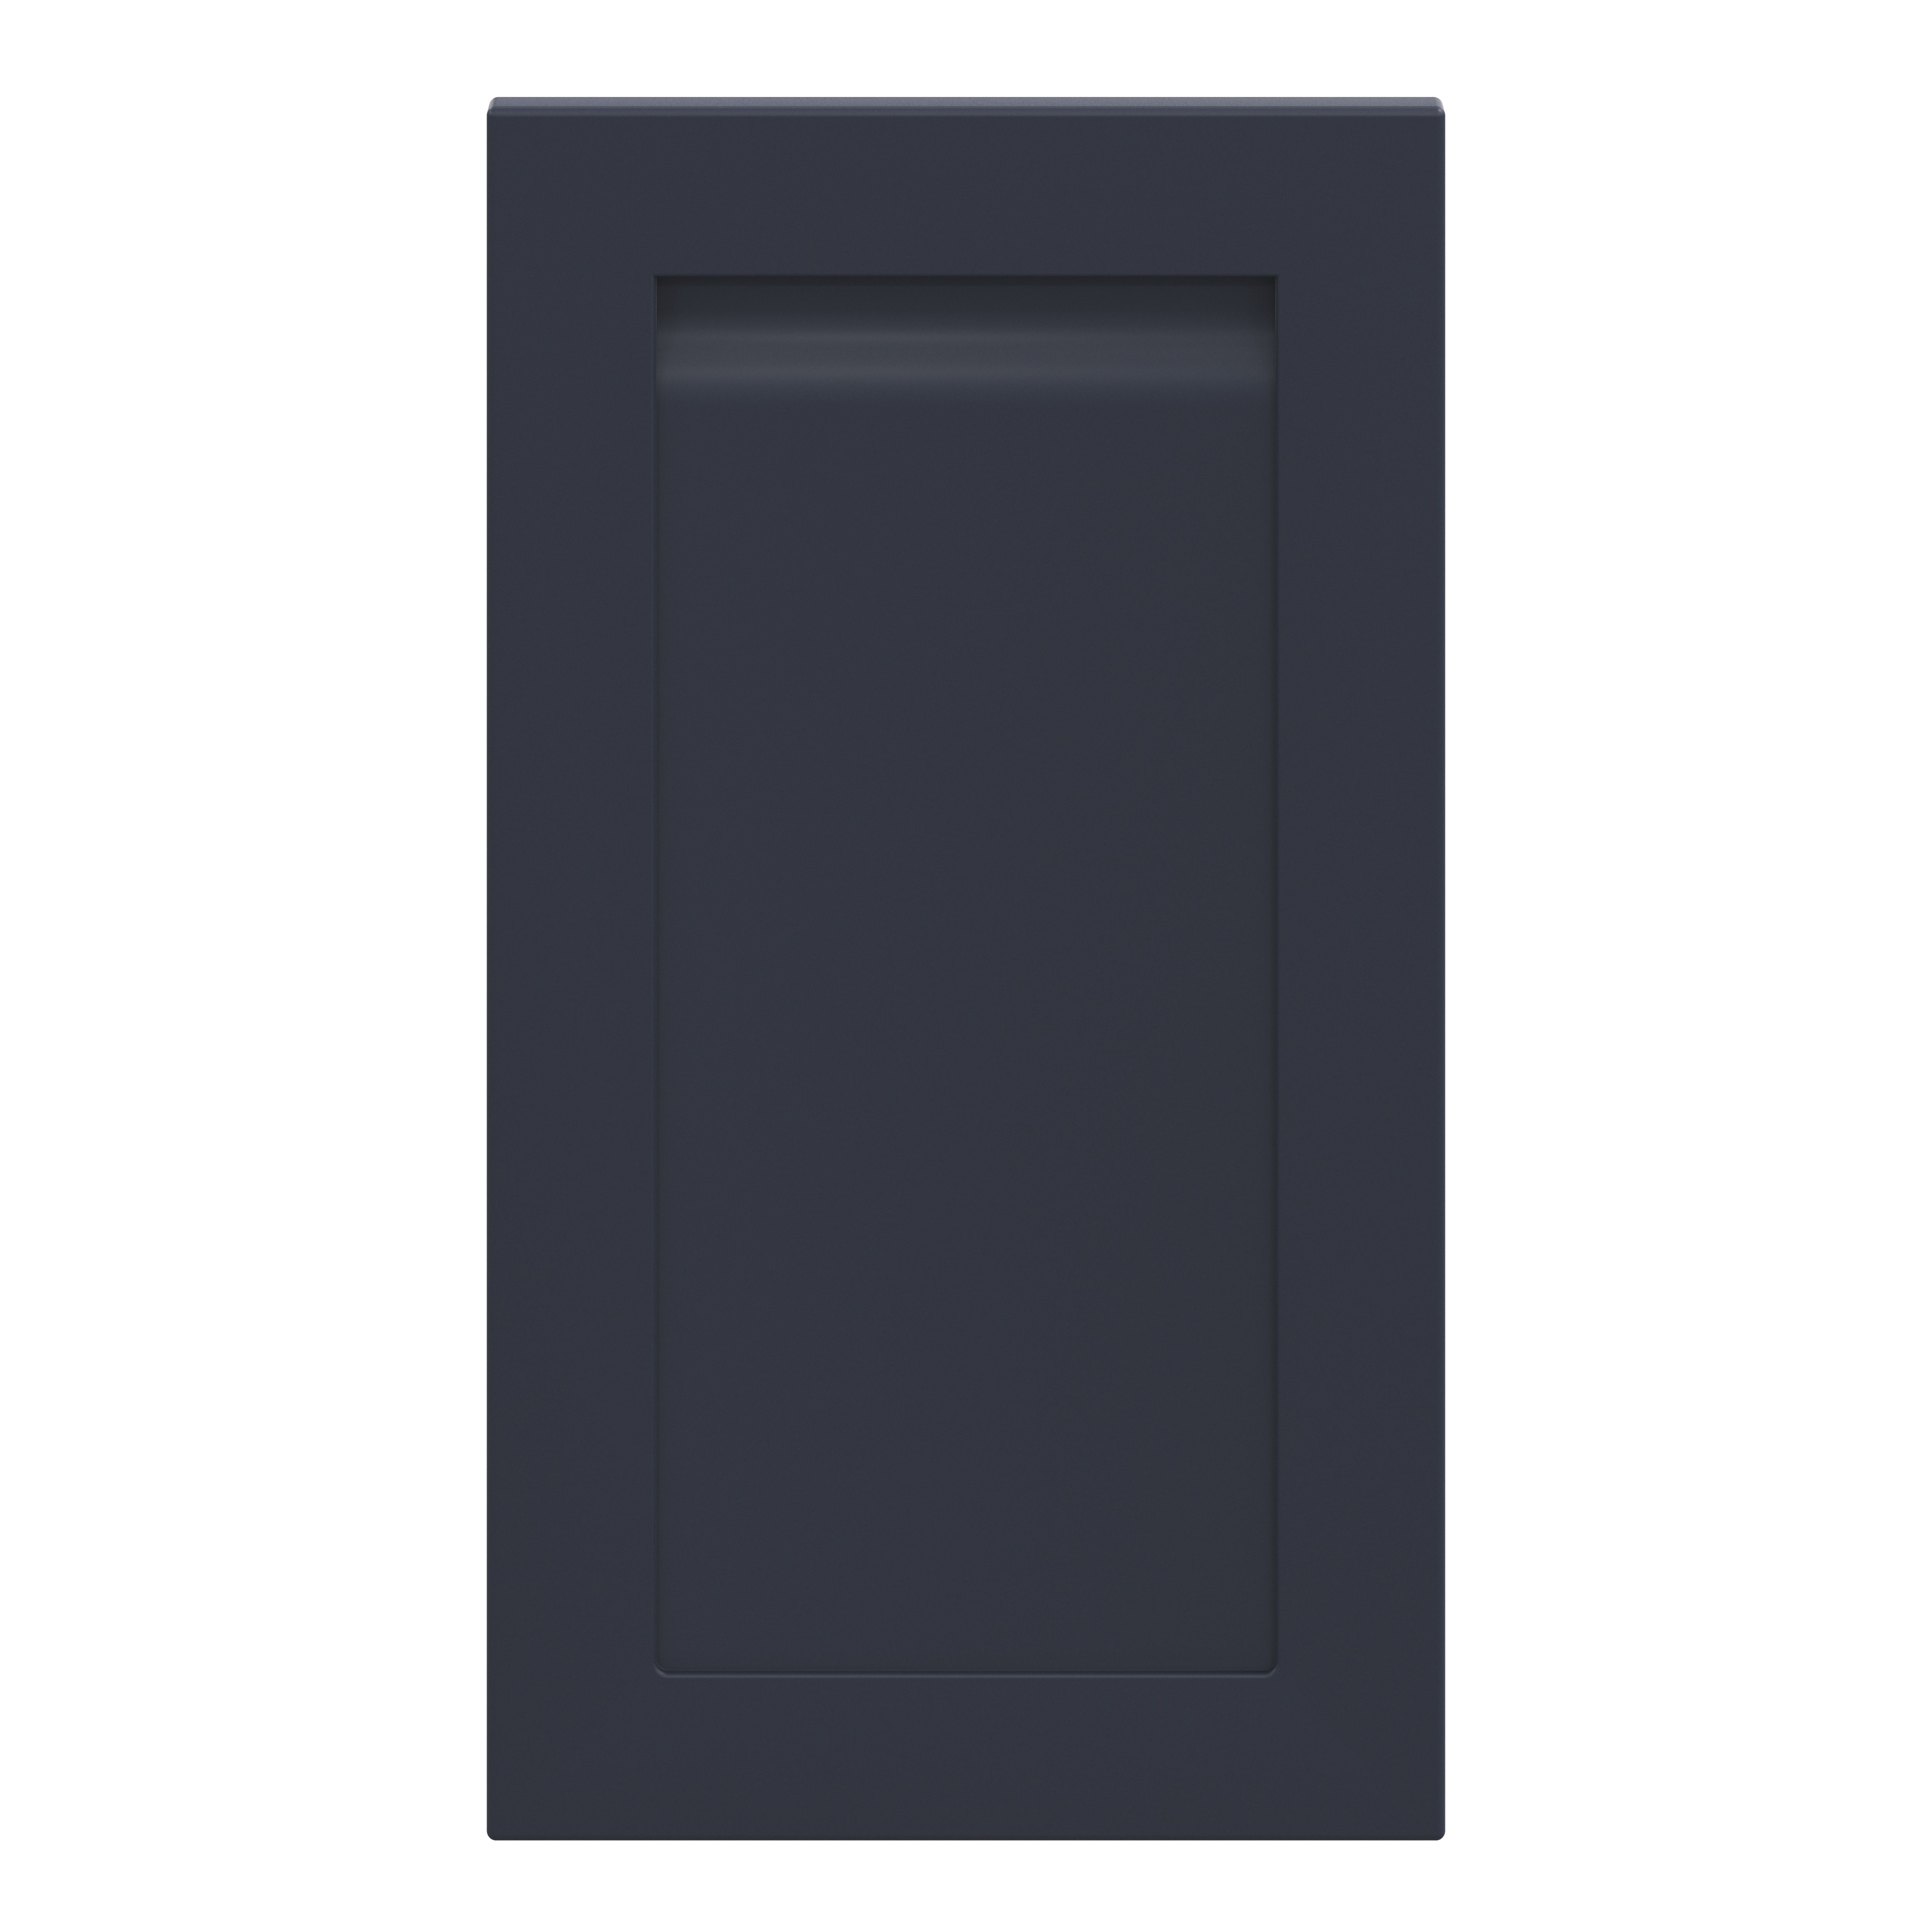 GoodHome Garcinia Matt Navy blue Highline Cabinet door (W)450mm (H)715mm (T)19mm